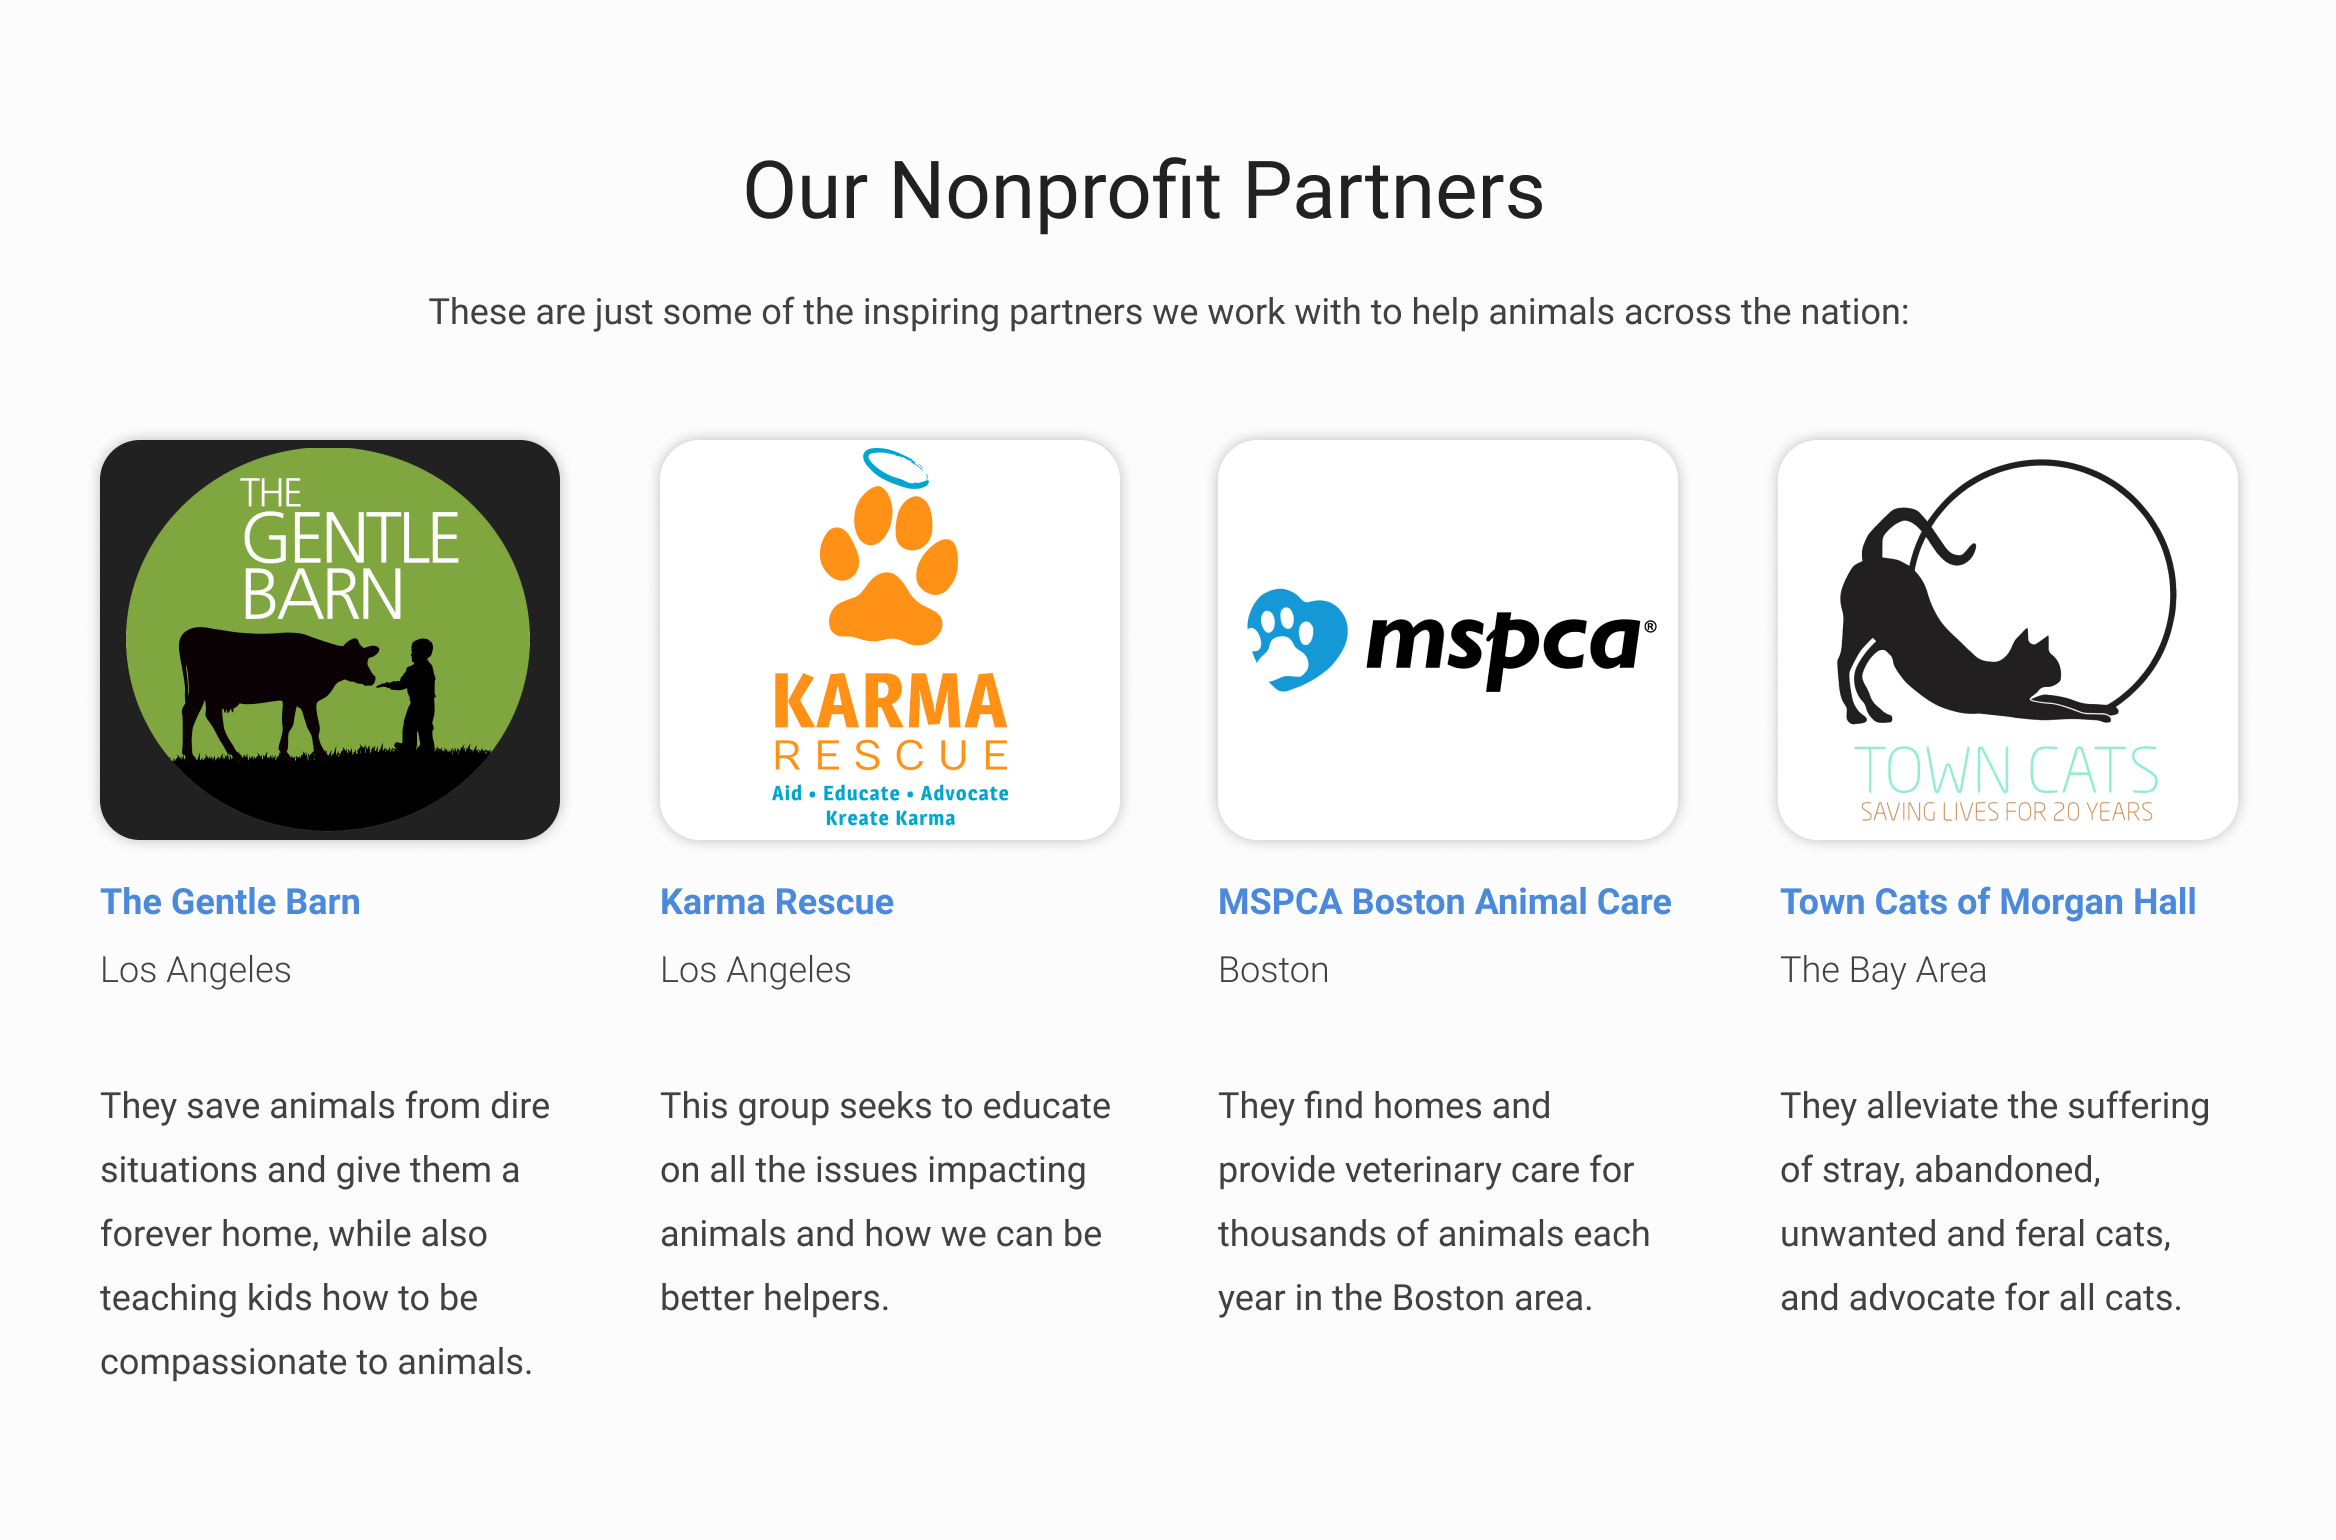 Our Nonprofit Partners Section